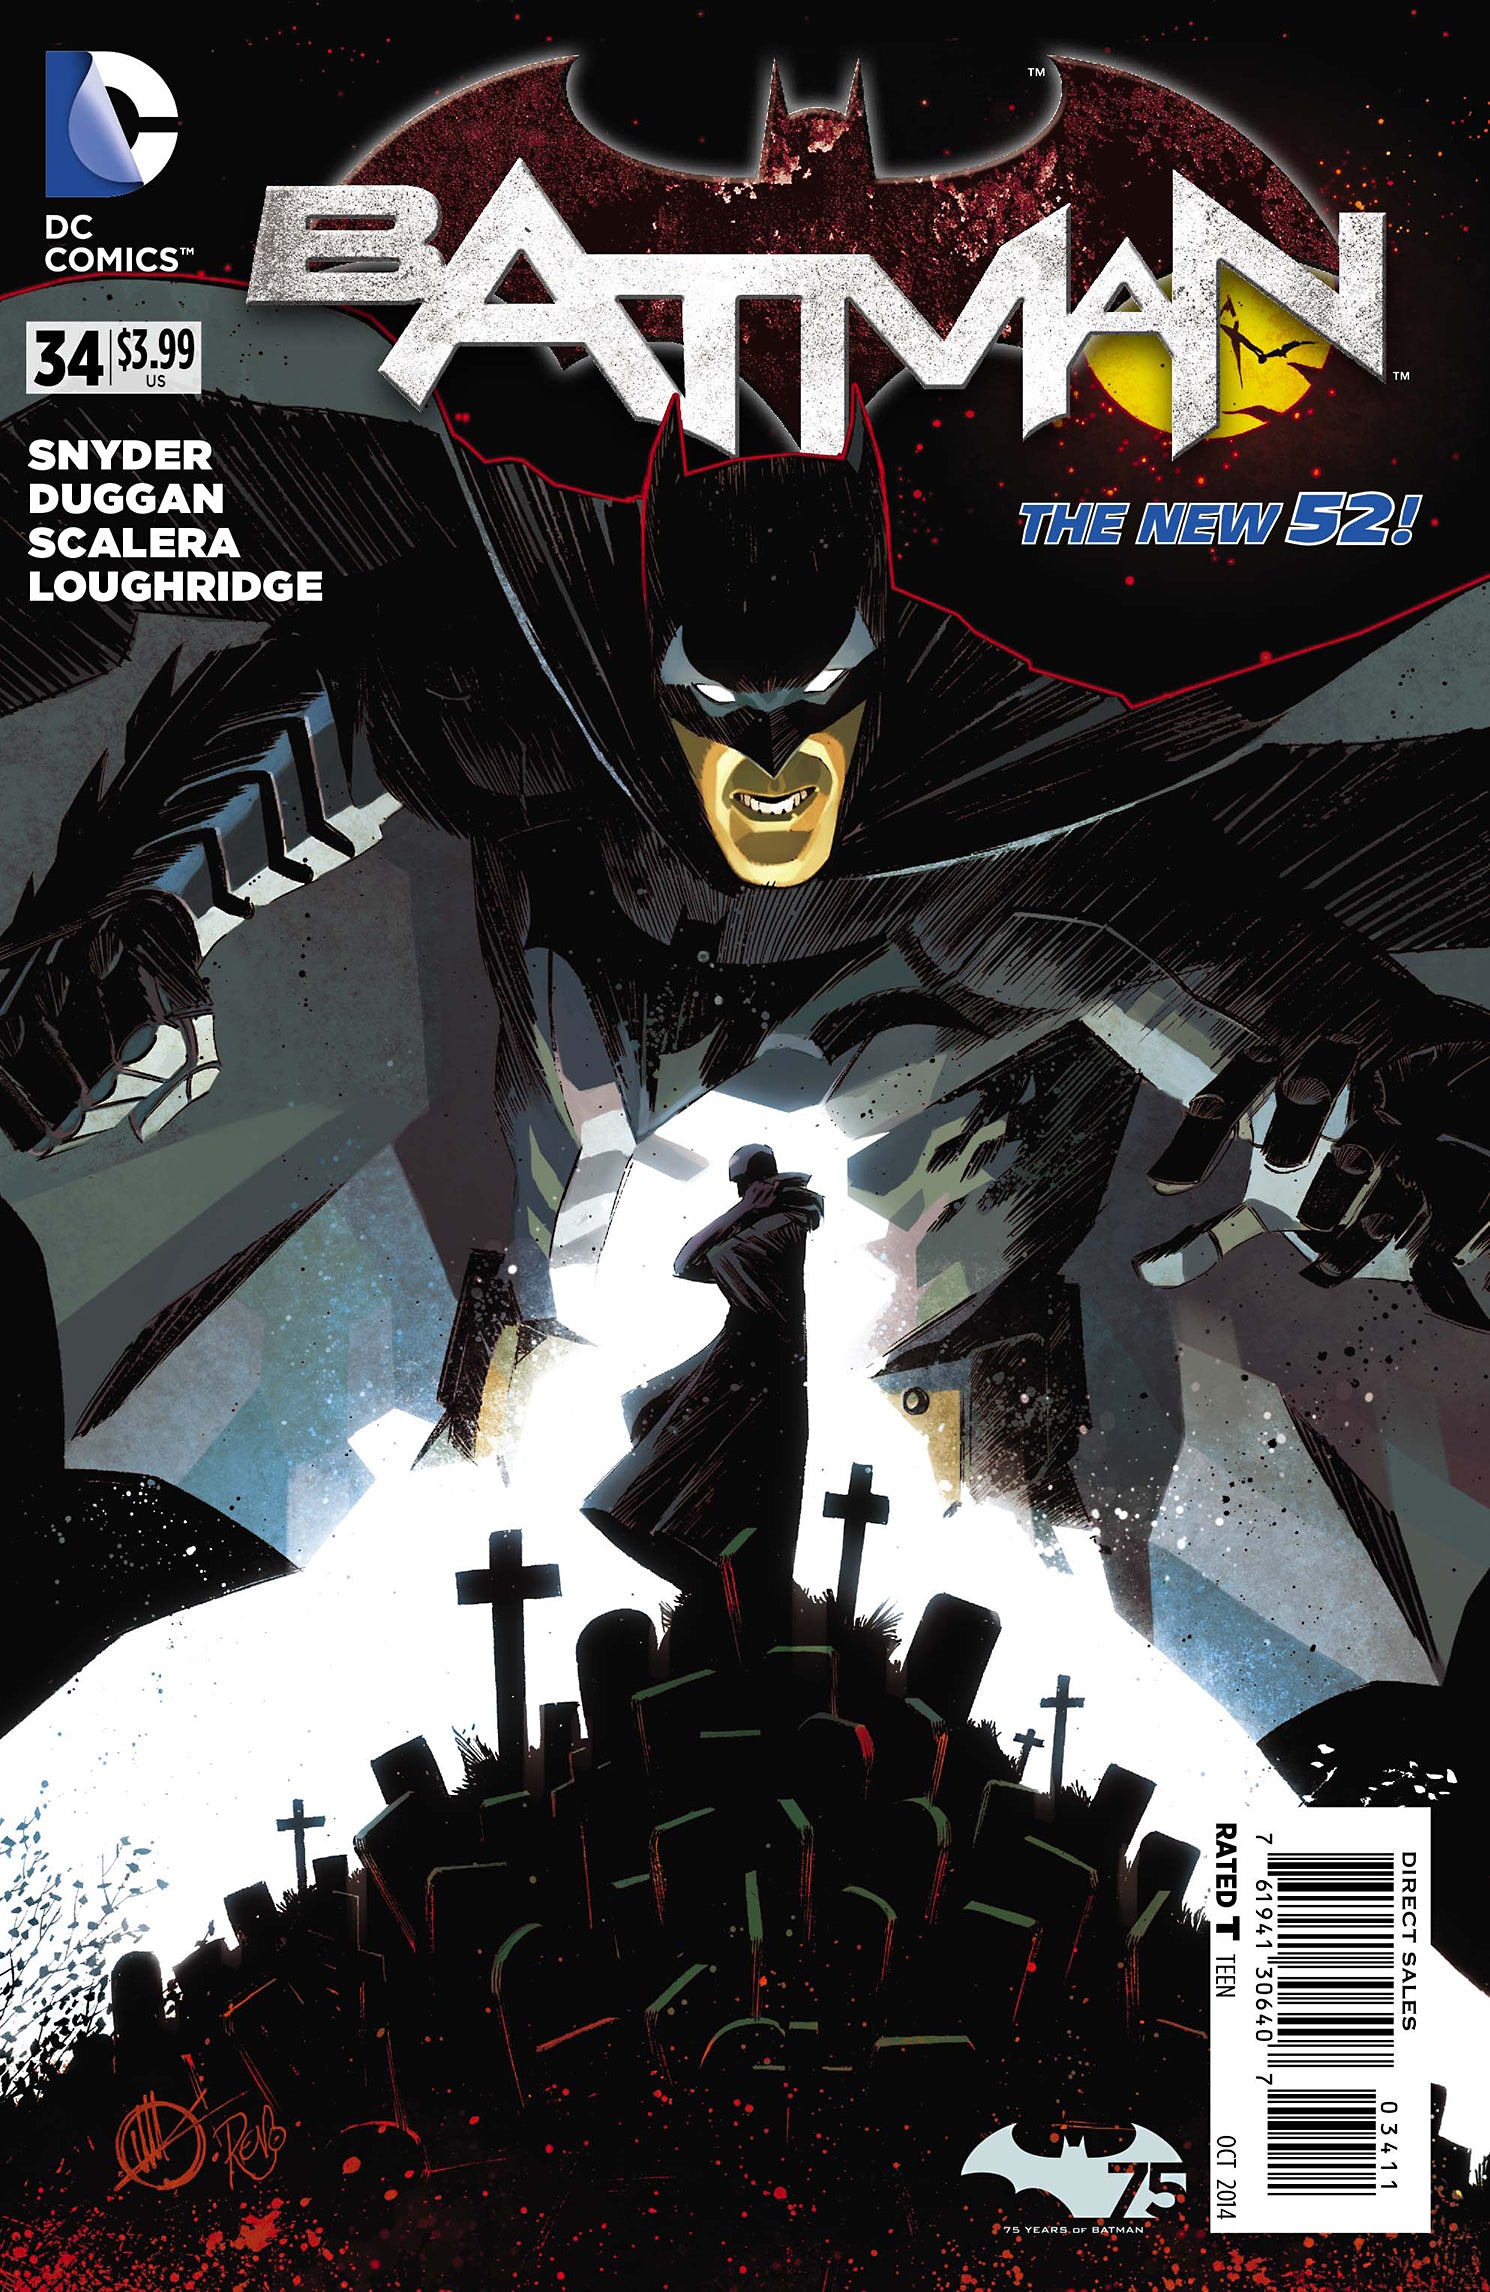 BATMAN #34 | Game Master's Emporium (The New GME)